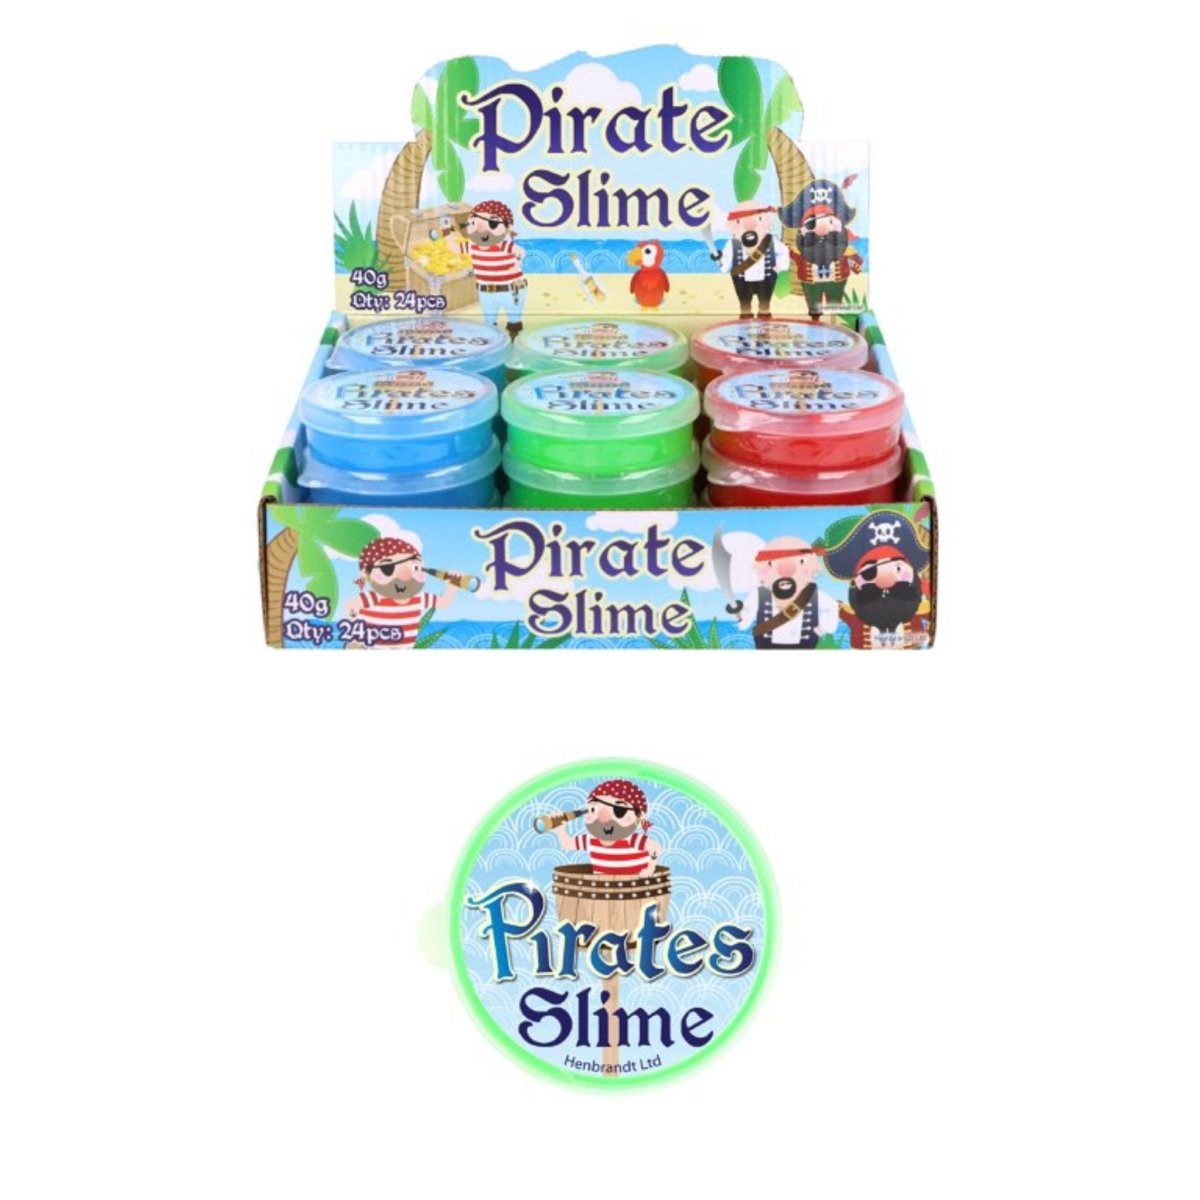 Pirate Slime Tub (7cm x 2cm) - Kids Party Craft